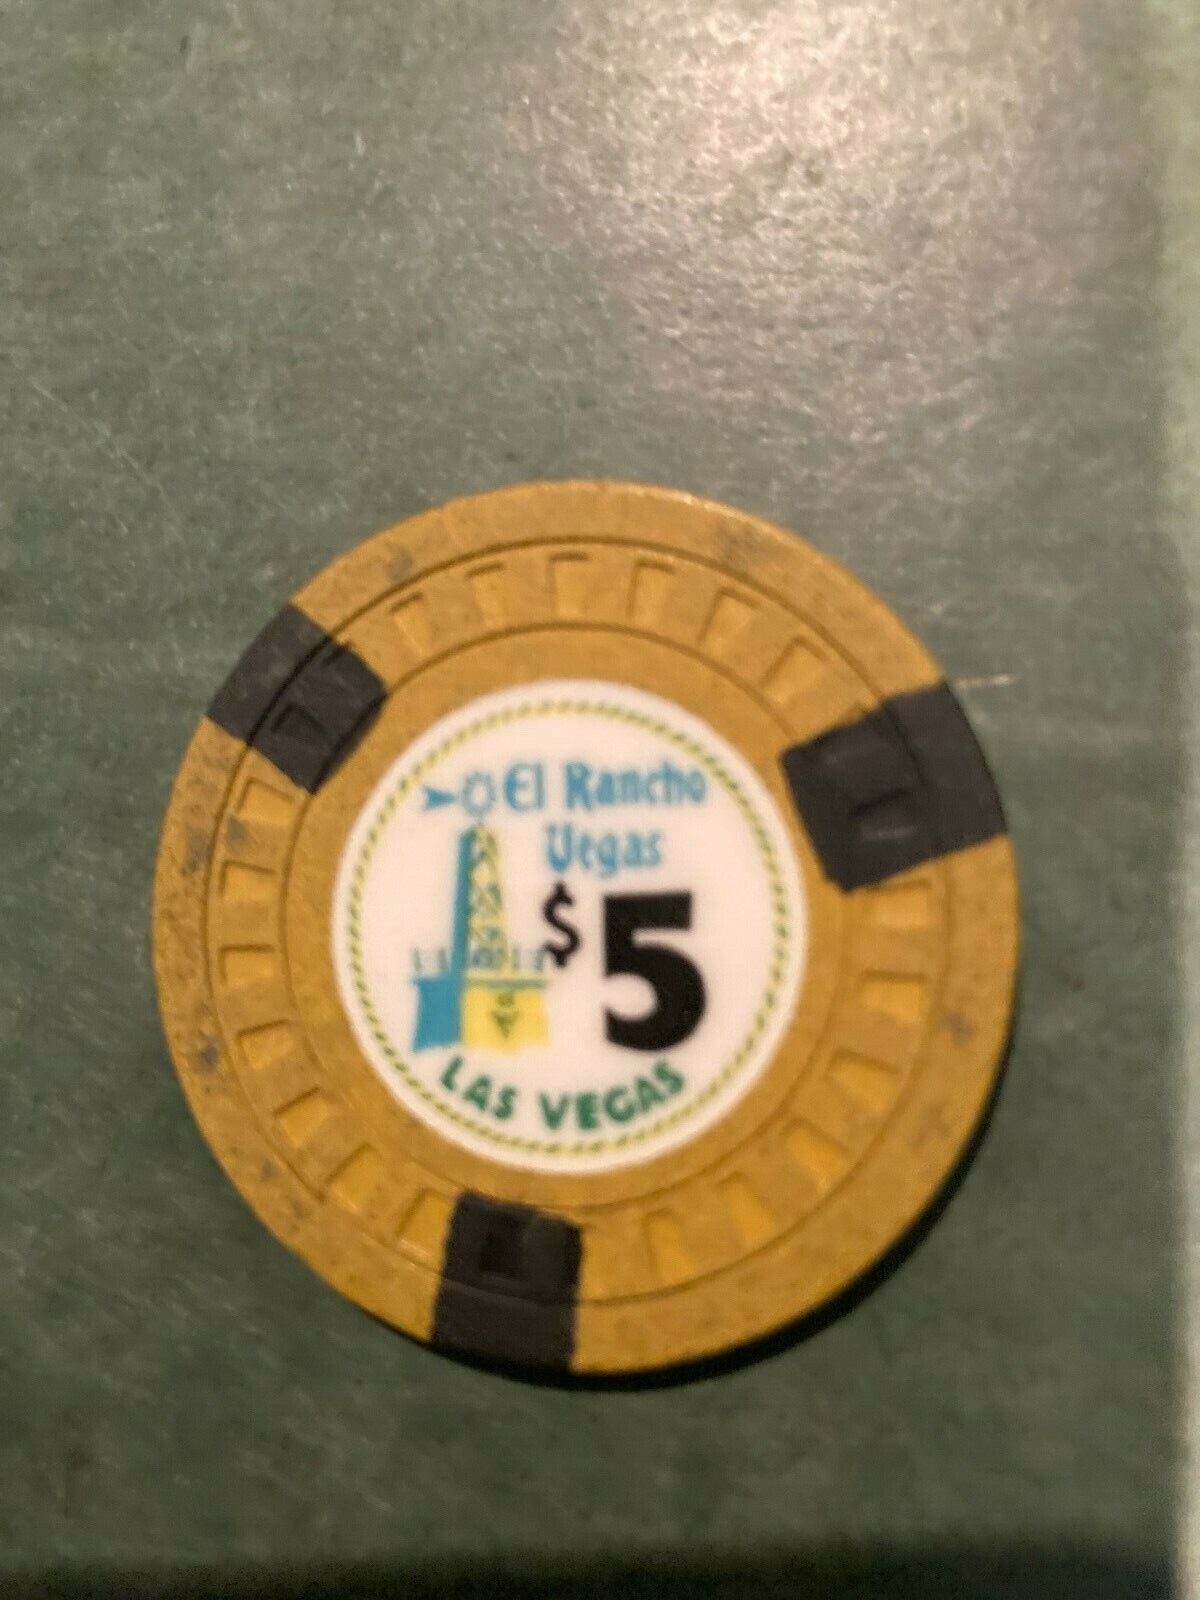 El Rancho Vegas Hotel $5.00 Casino Chip 1950's Hub Mold 1950's Las Vegas Nevada